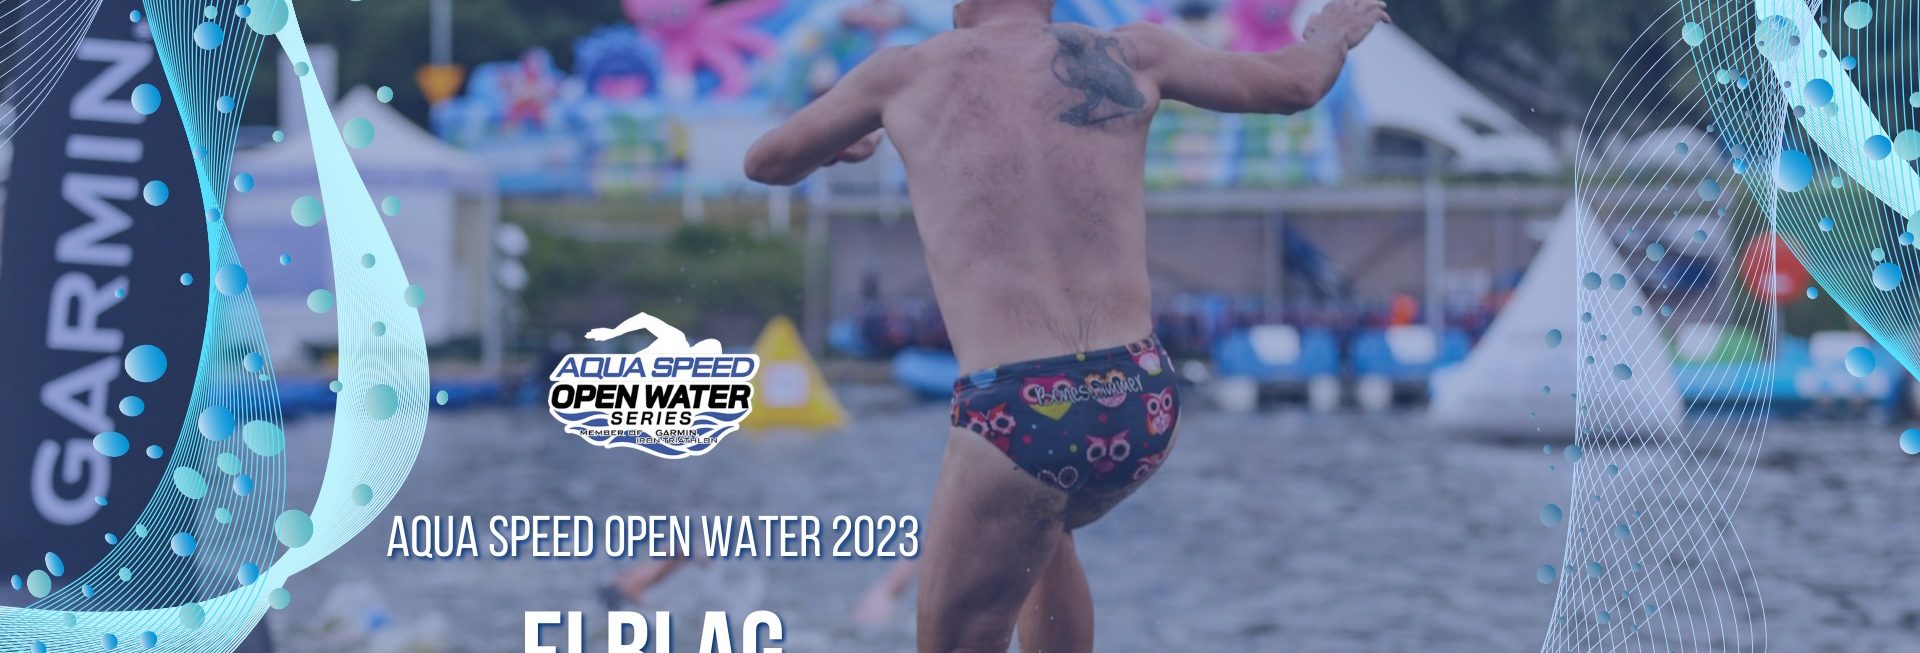 Plakat zapraszający do Elbląga na imprezę sportową AQUA SPEED Open Water Series Elbląg 2023.